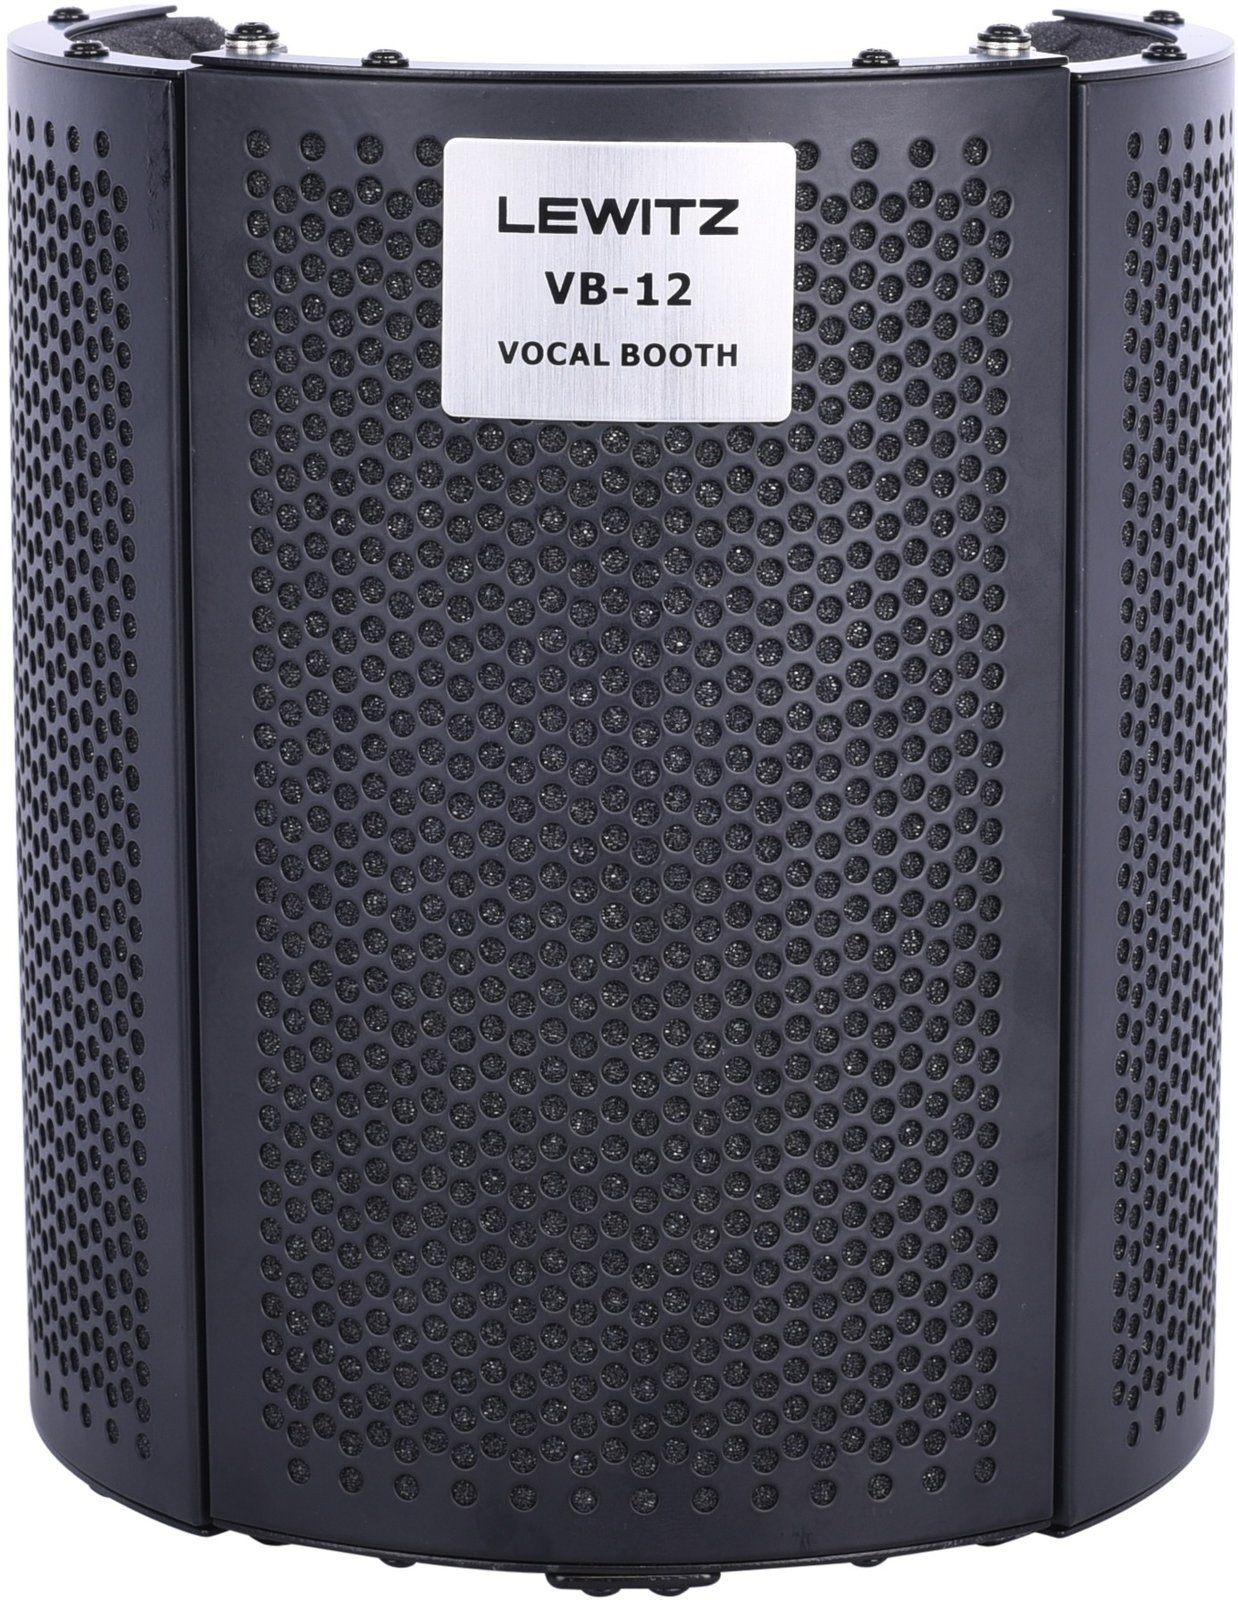 Portable acoustic panel Lewitz VB-12